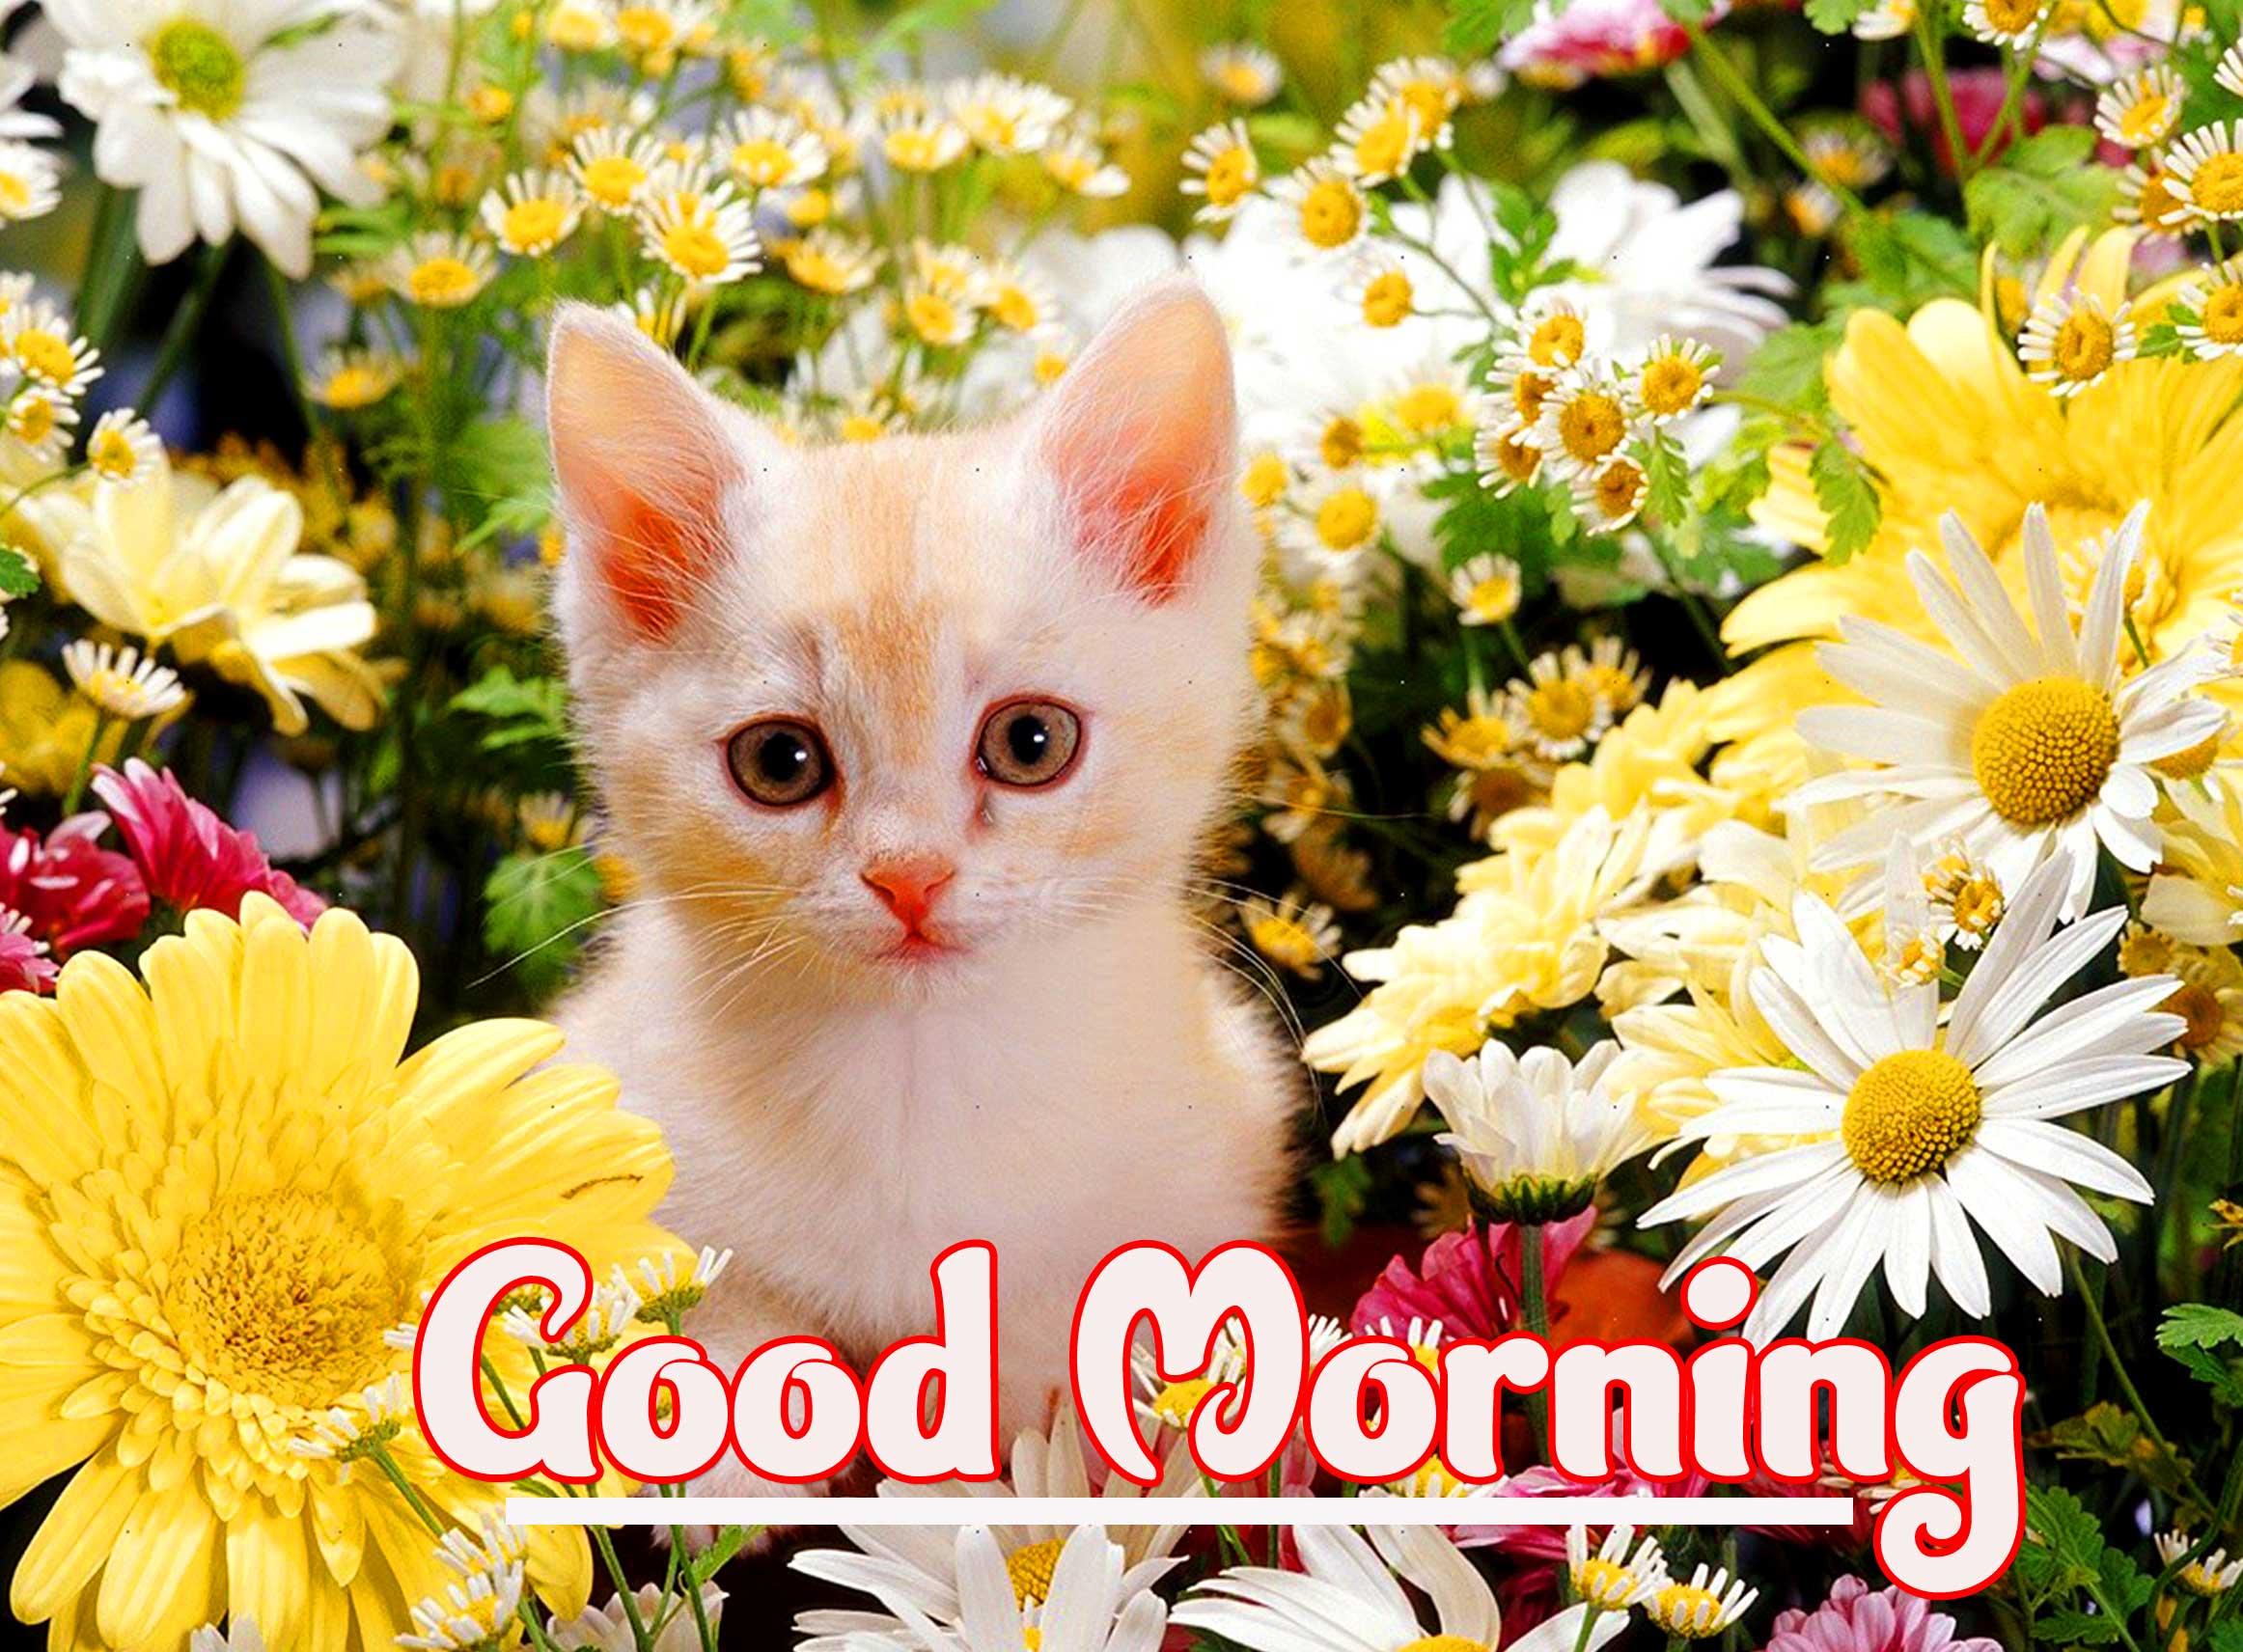 Animal Bird Lion Good Morning Wishes Wallpaper Pics Download 